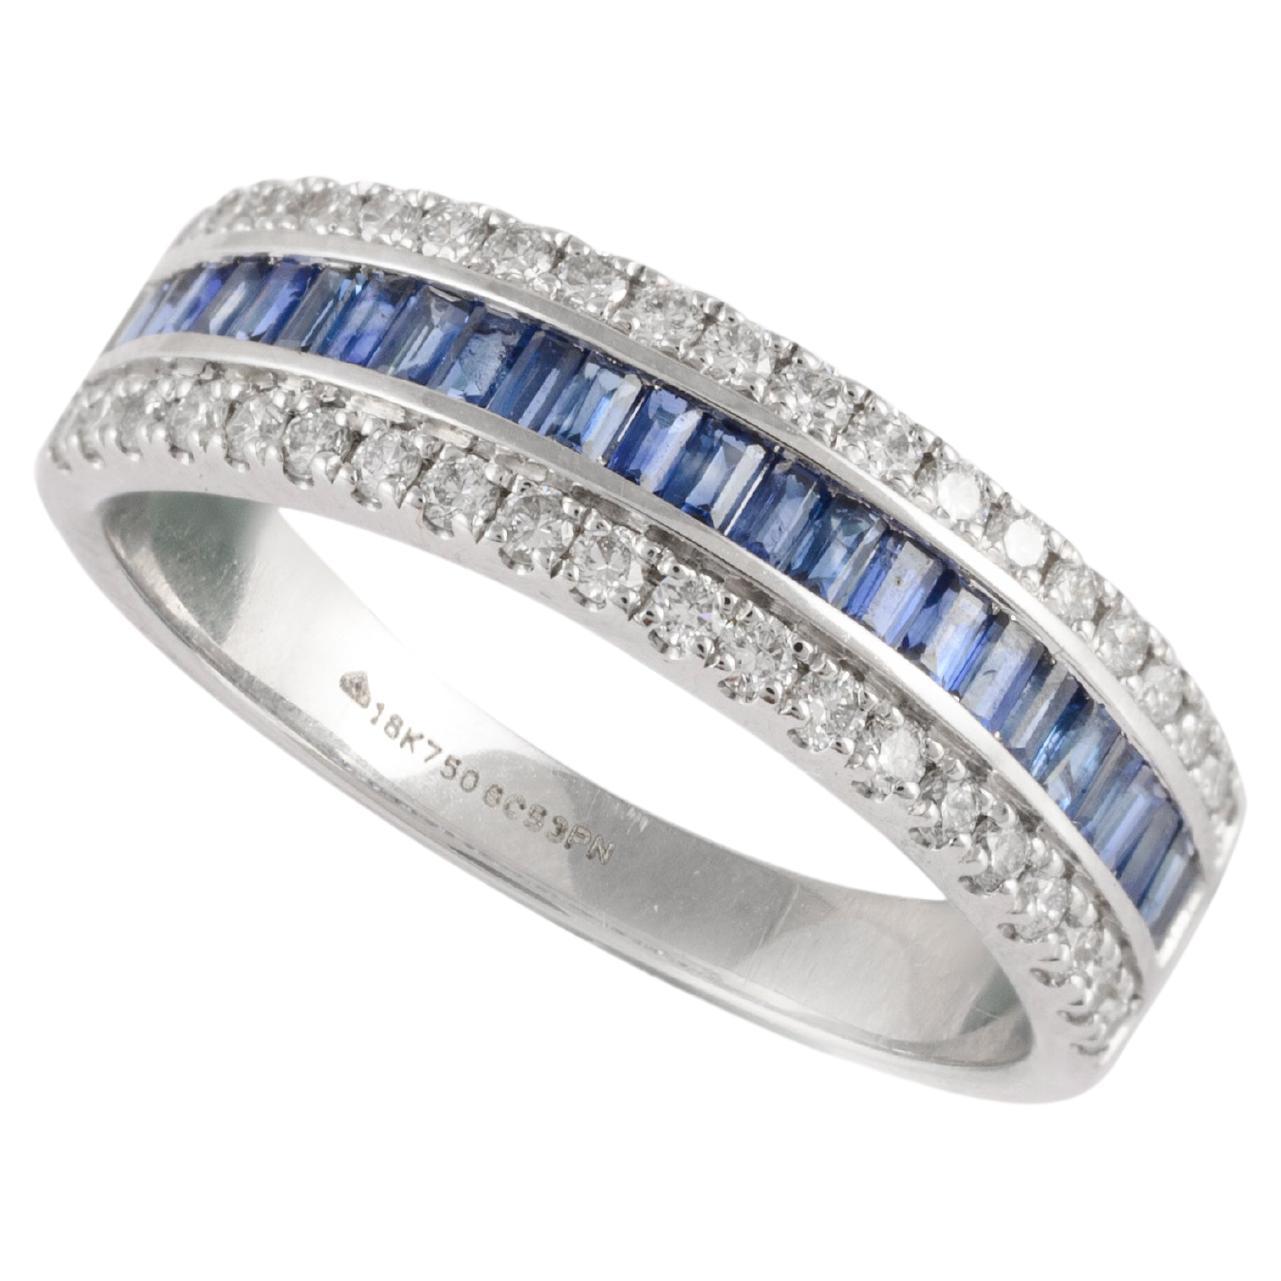 Bague de mariage en or blanc massif 18 carats avec saphir bleu naturel et diamants